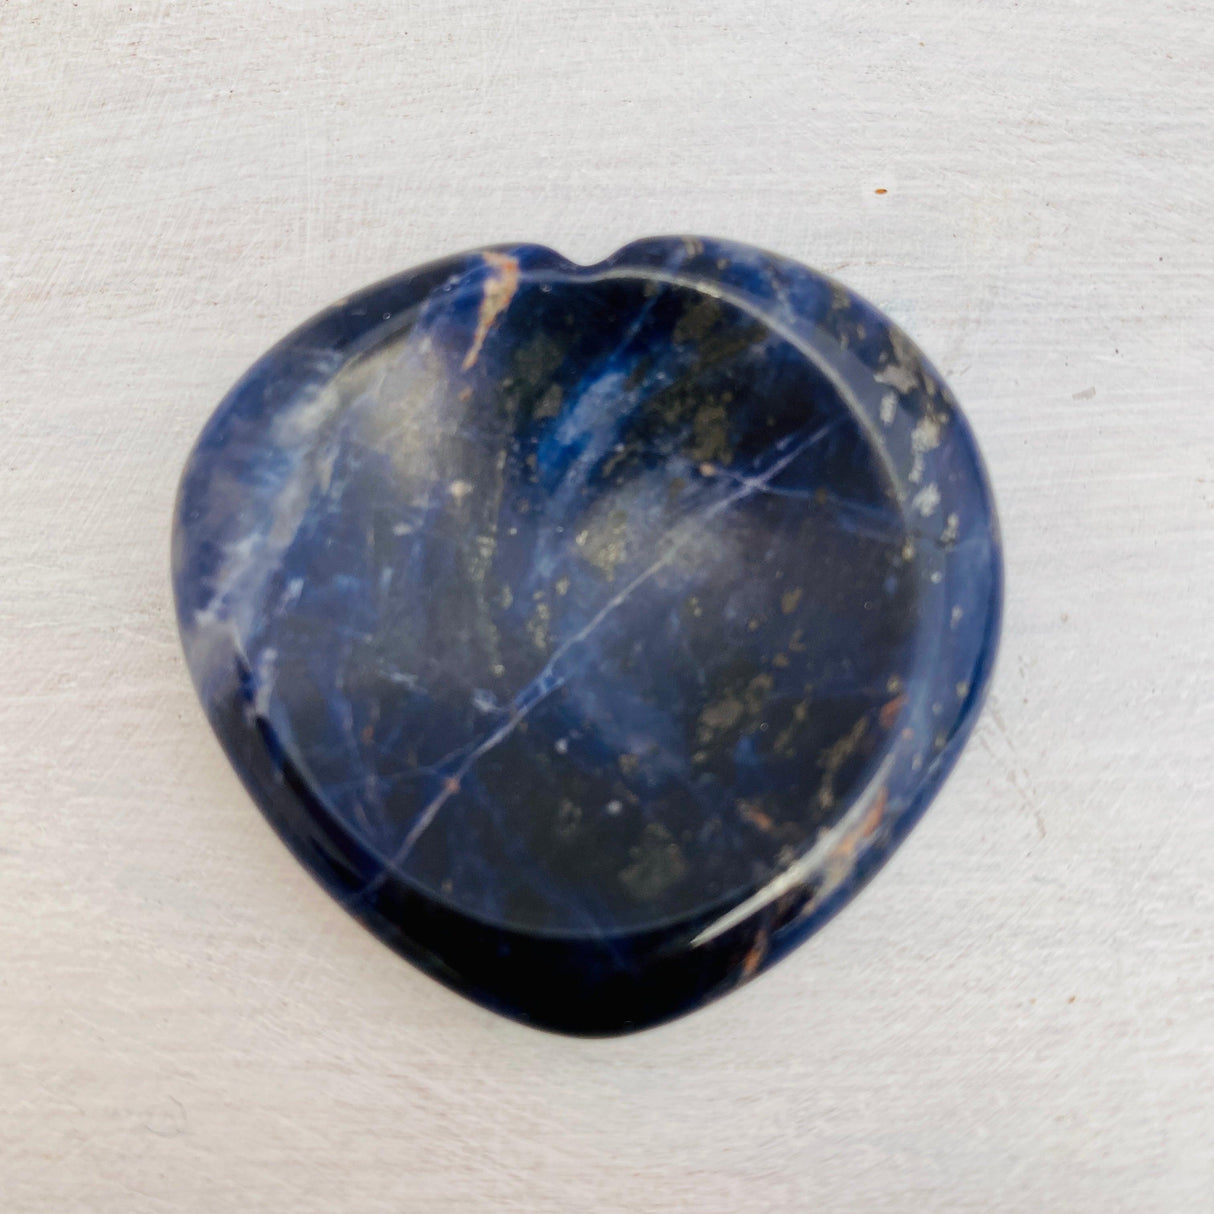 Heart-shaped Worry Stones - Flat Pocket Stones - Nature's Magick